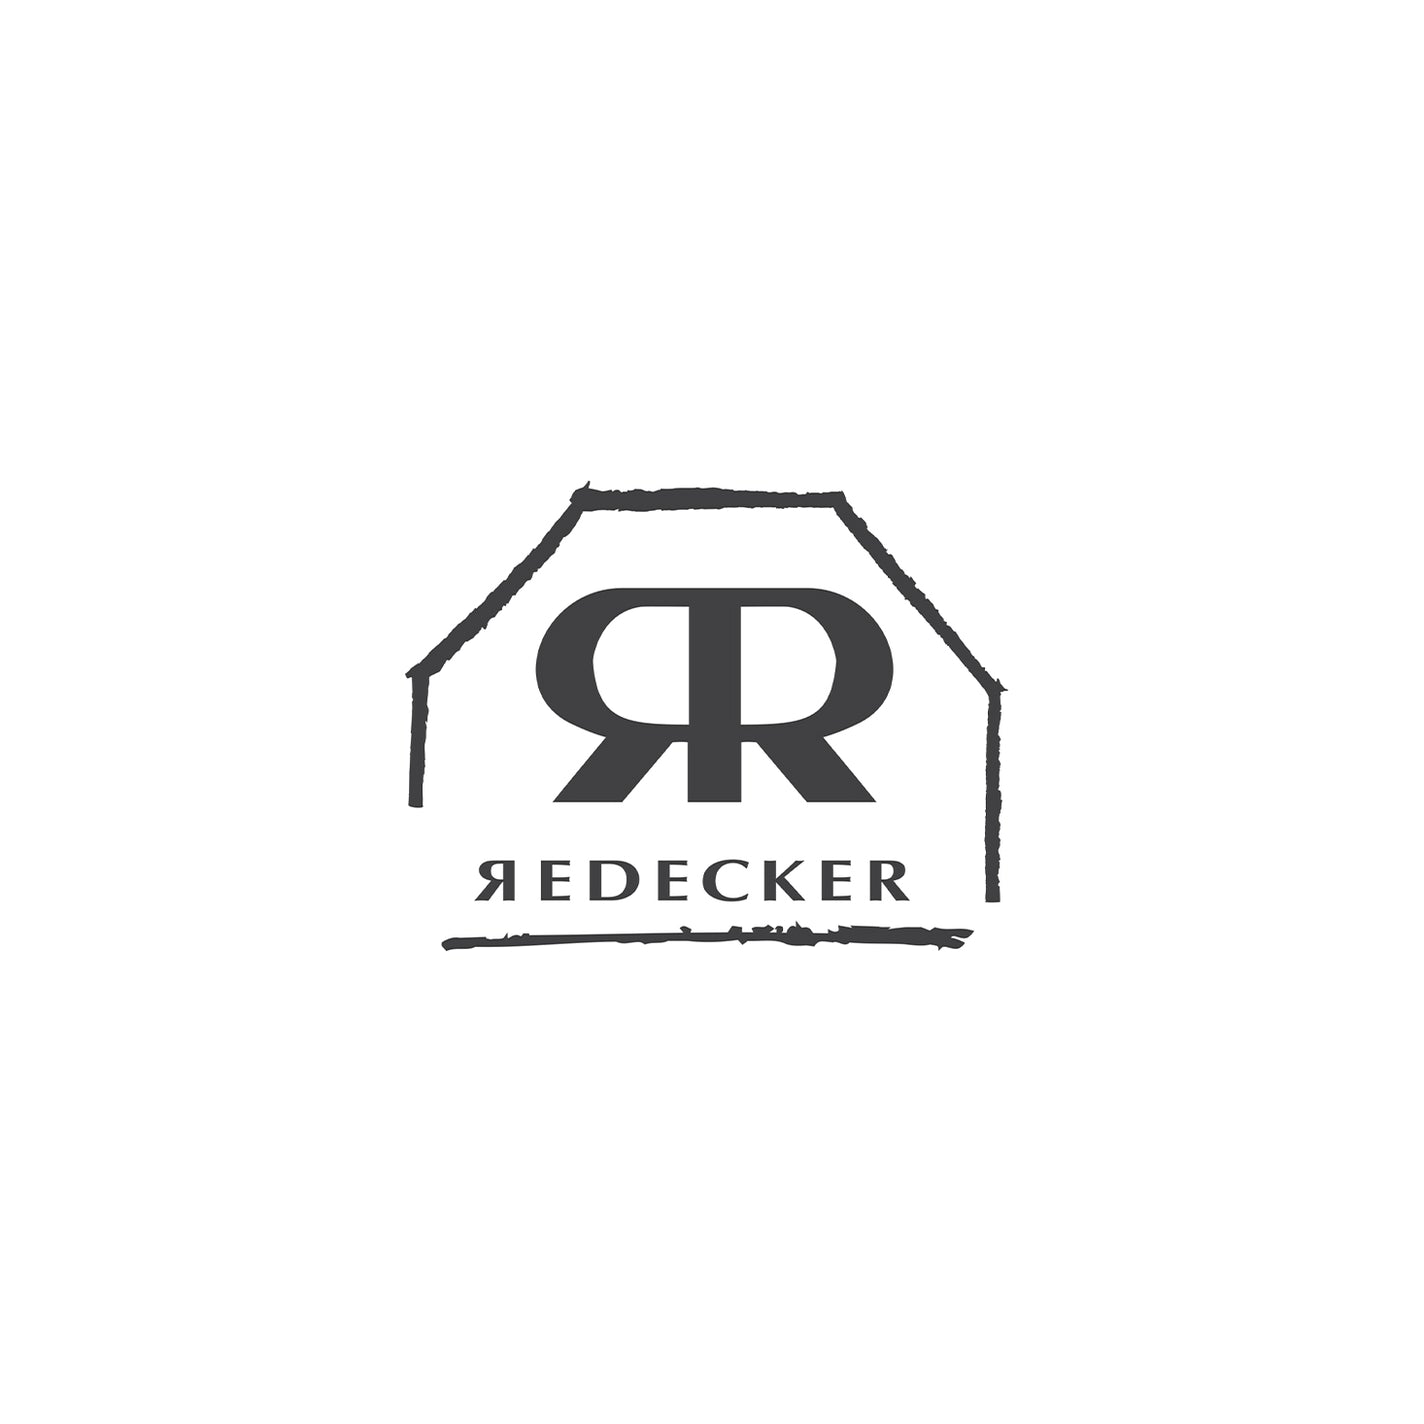 Redecker Copper Cloth - Set of 2